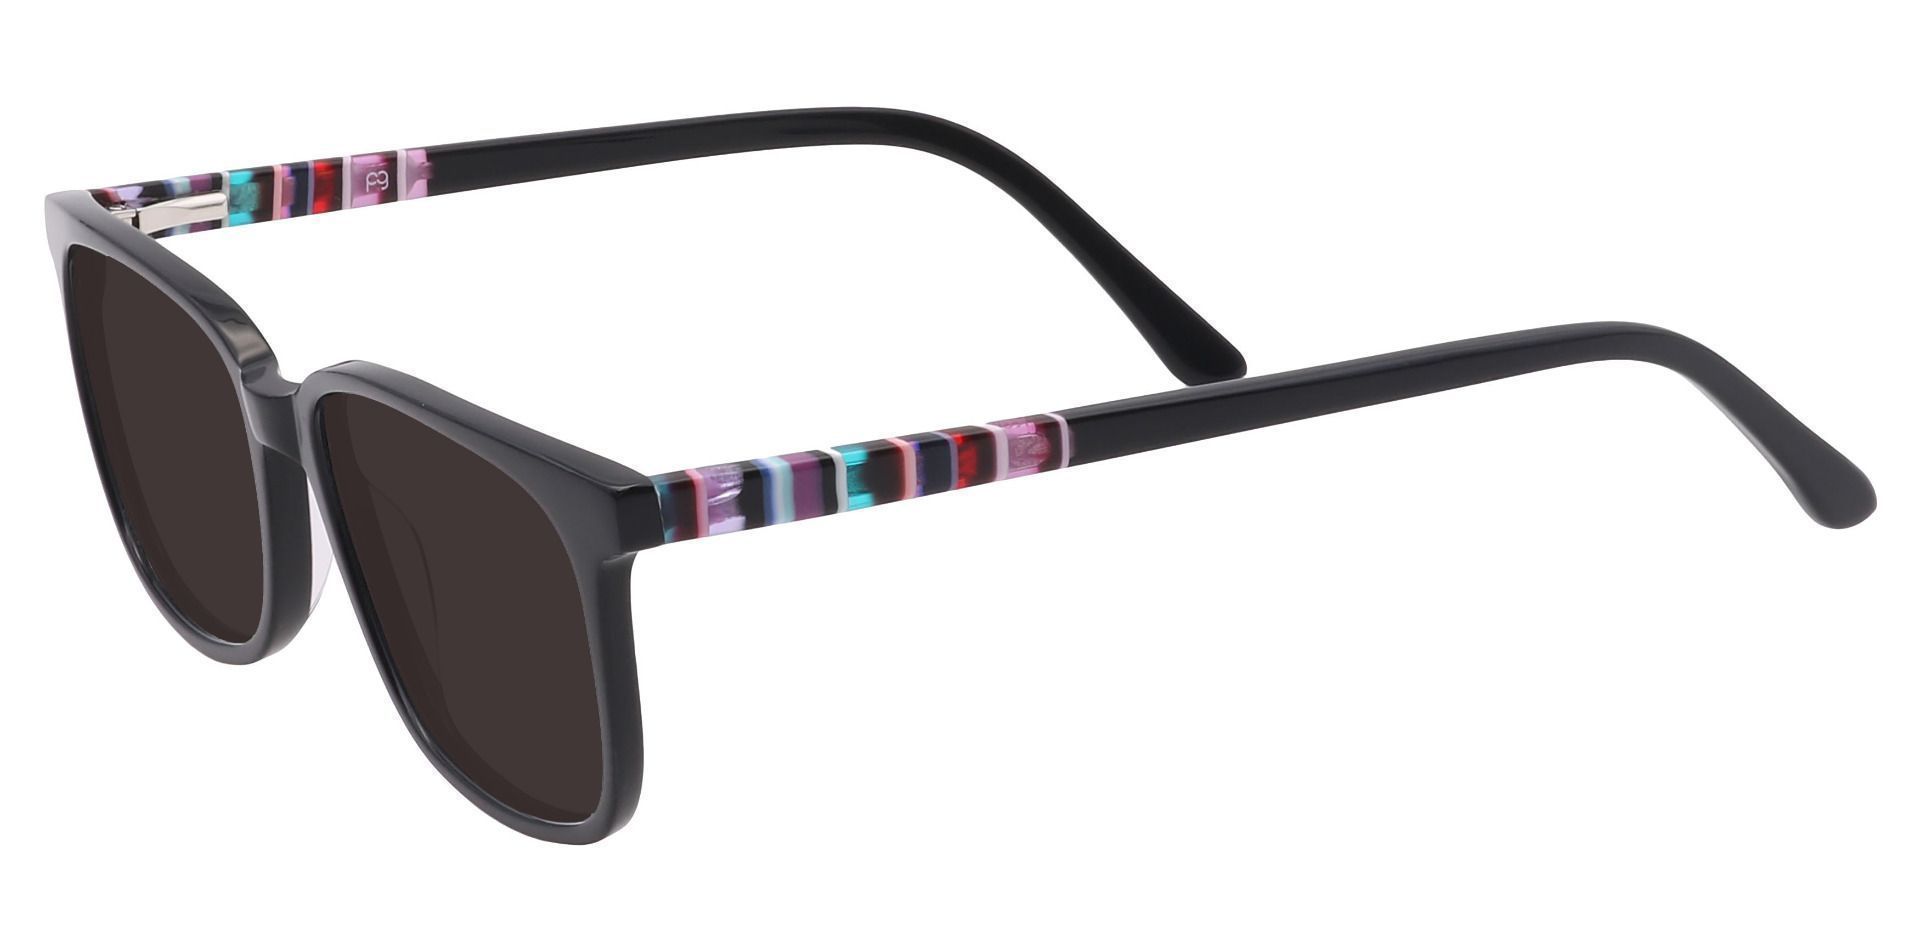 Fern Square Non-Rx Sunglasses - Black Frame With Gray Lenses